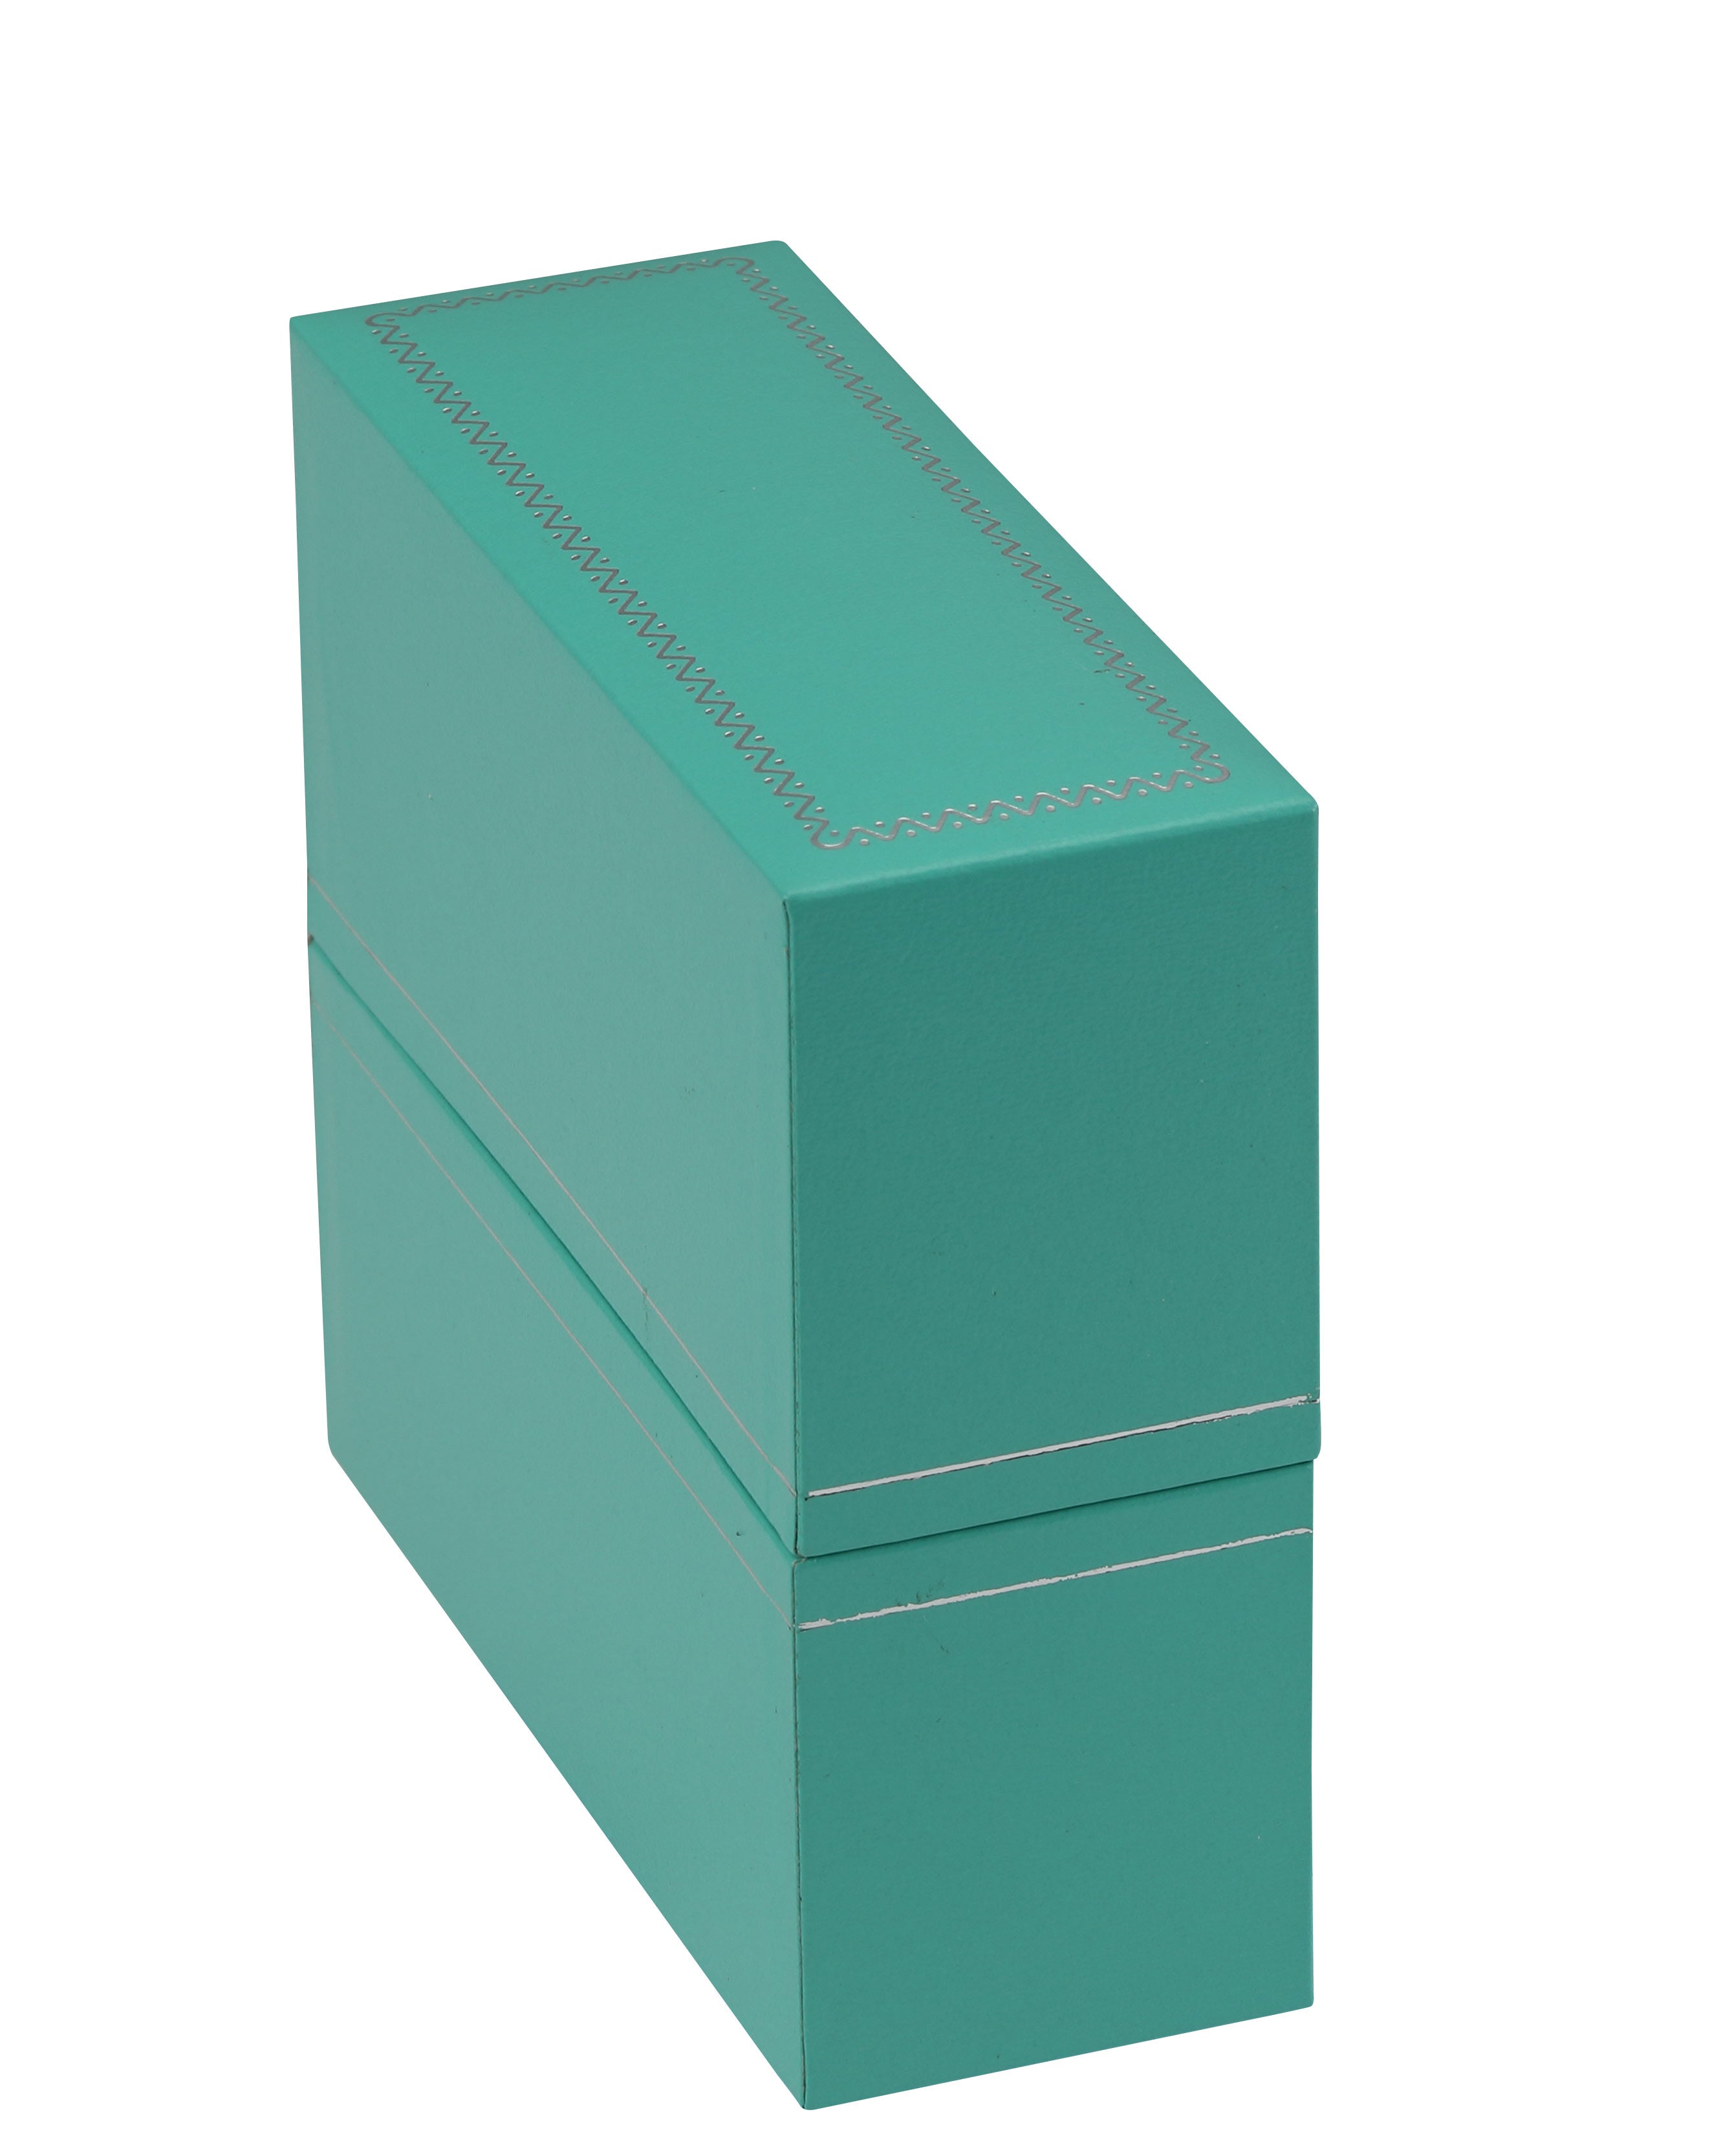 "Manhattan" Bangle Box in Turquoise/Silver Trim